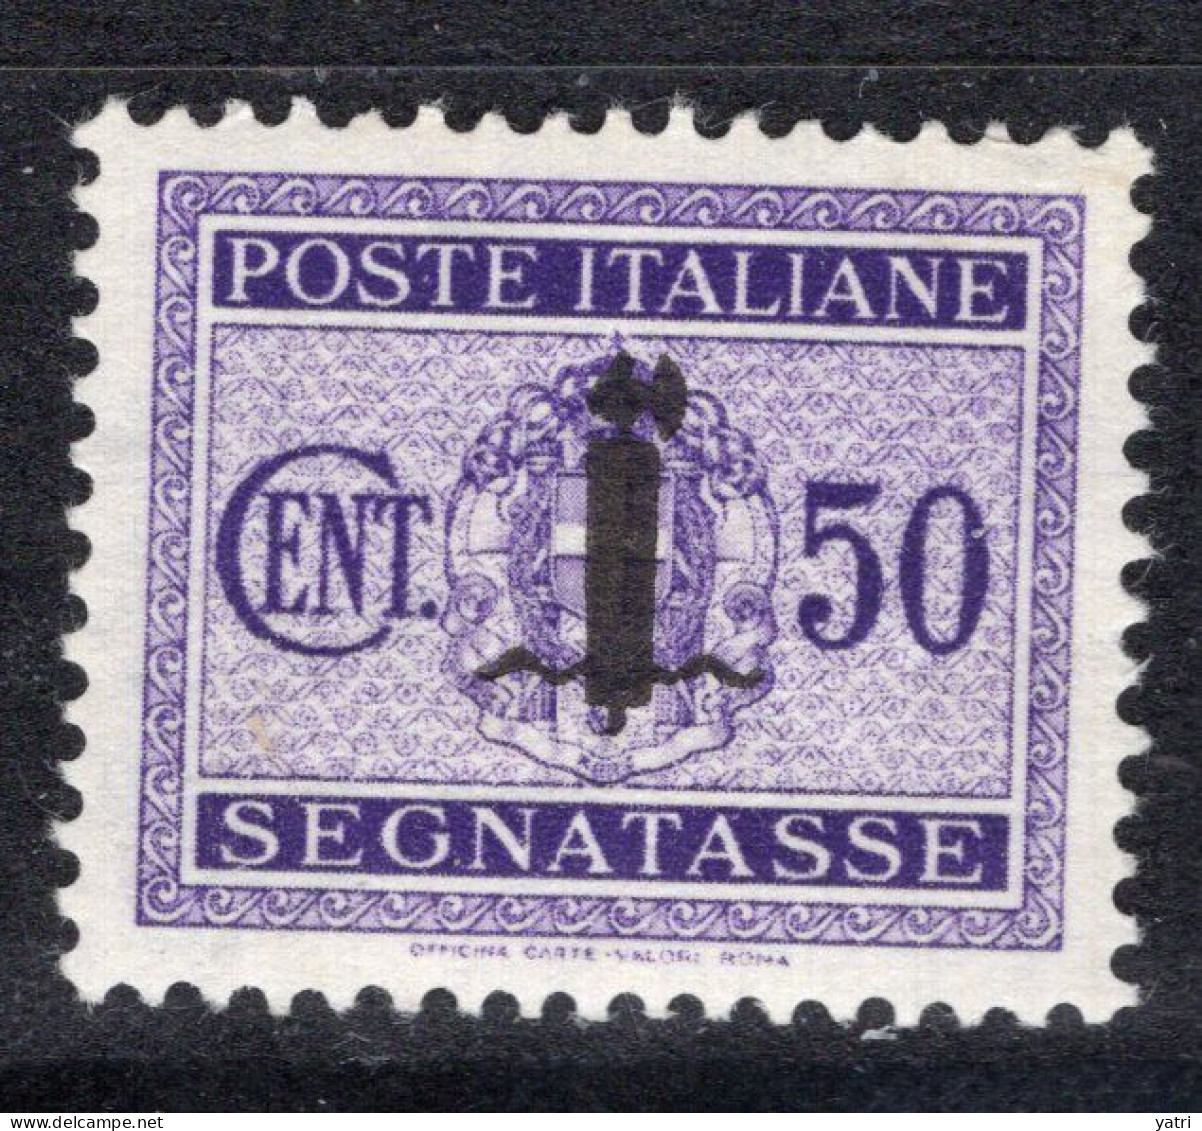 Repubblica Sociale Italiana - Segnatasse 50 Centesimi * MH - Postage Due